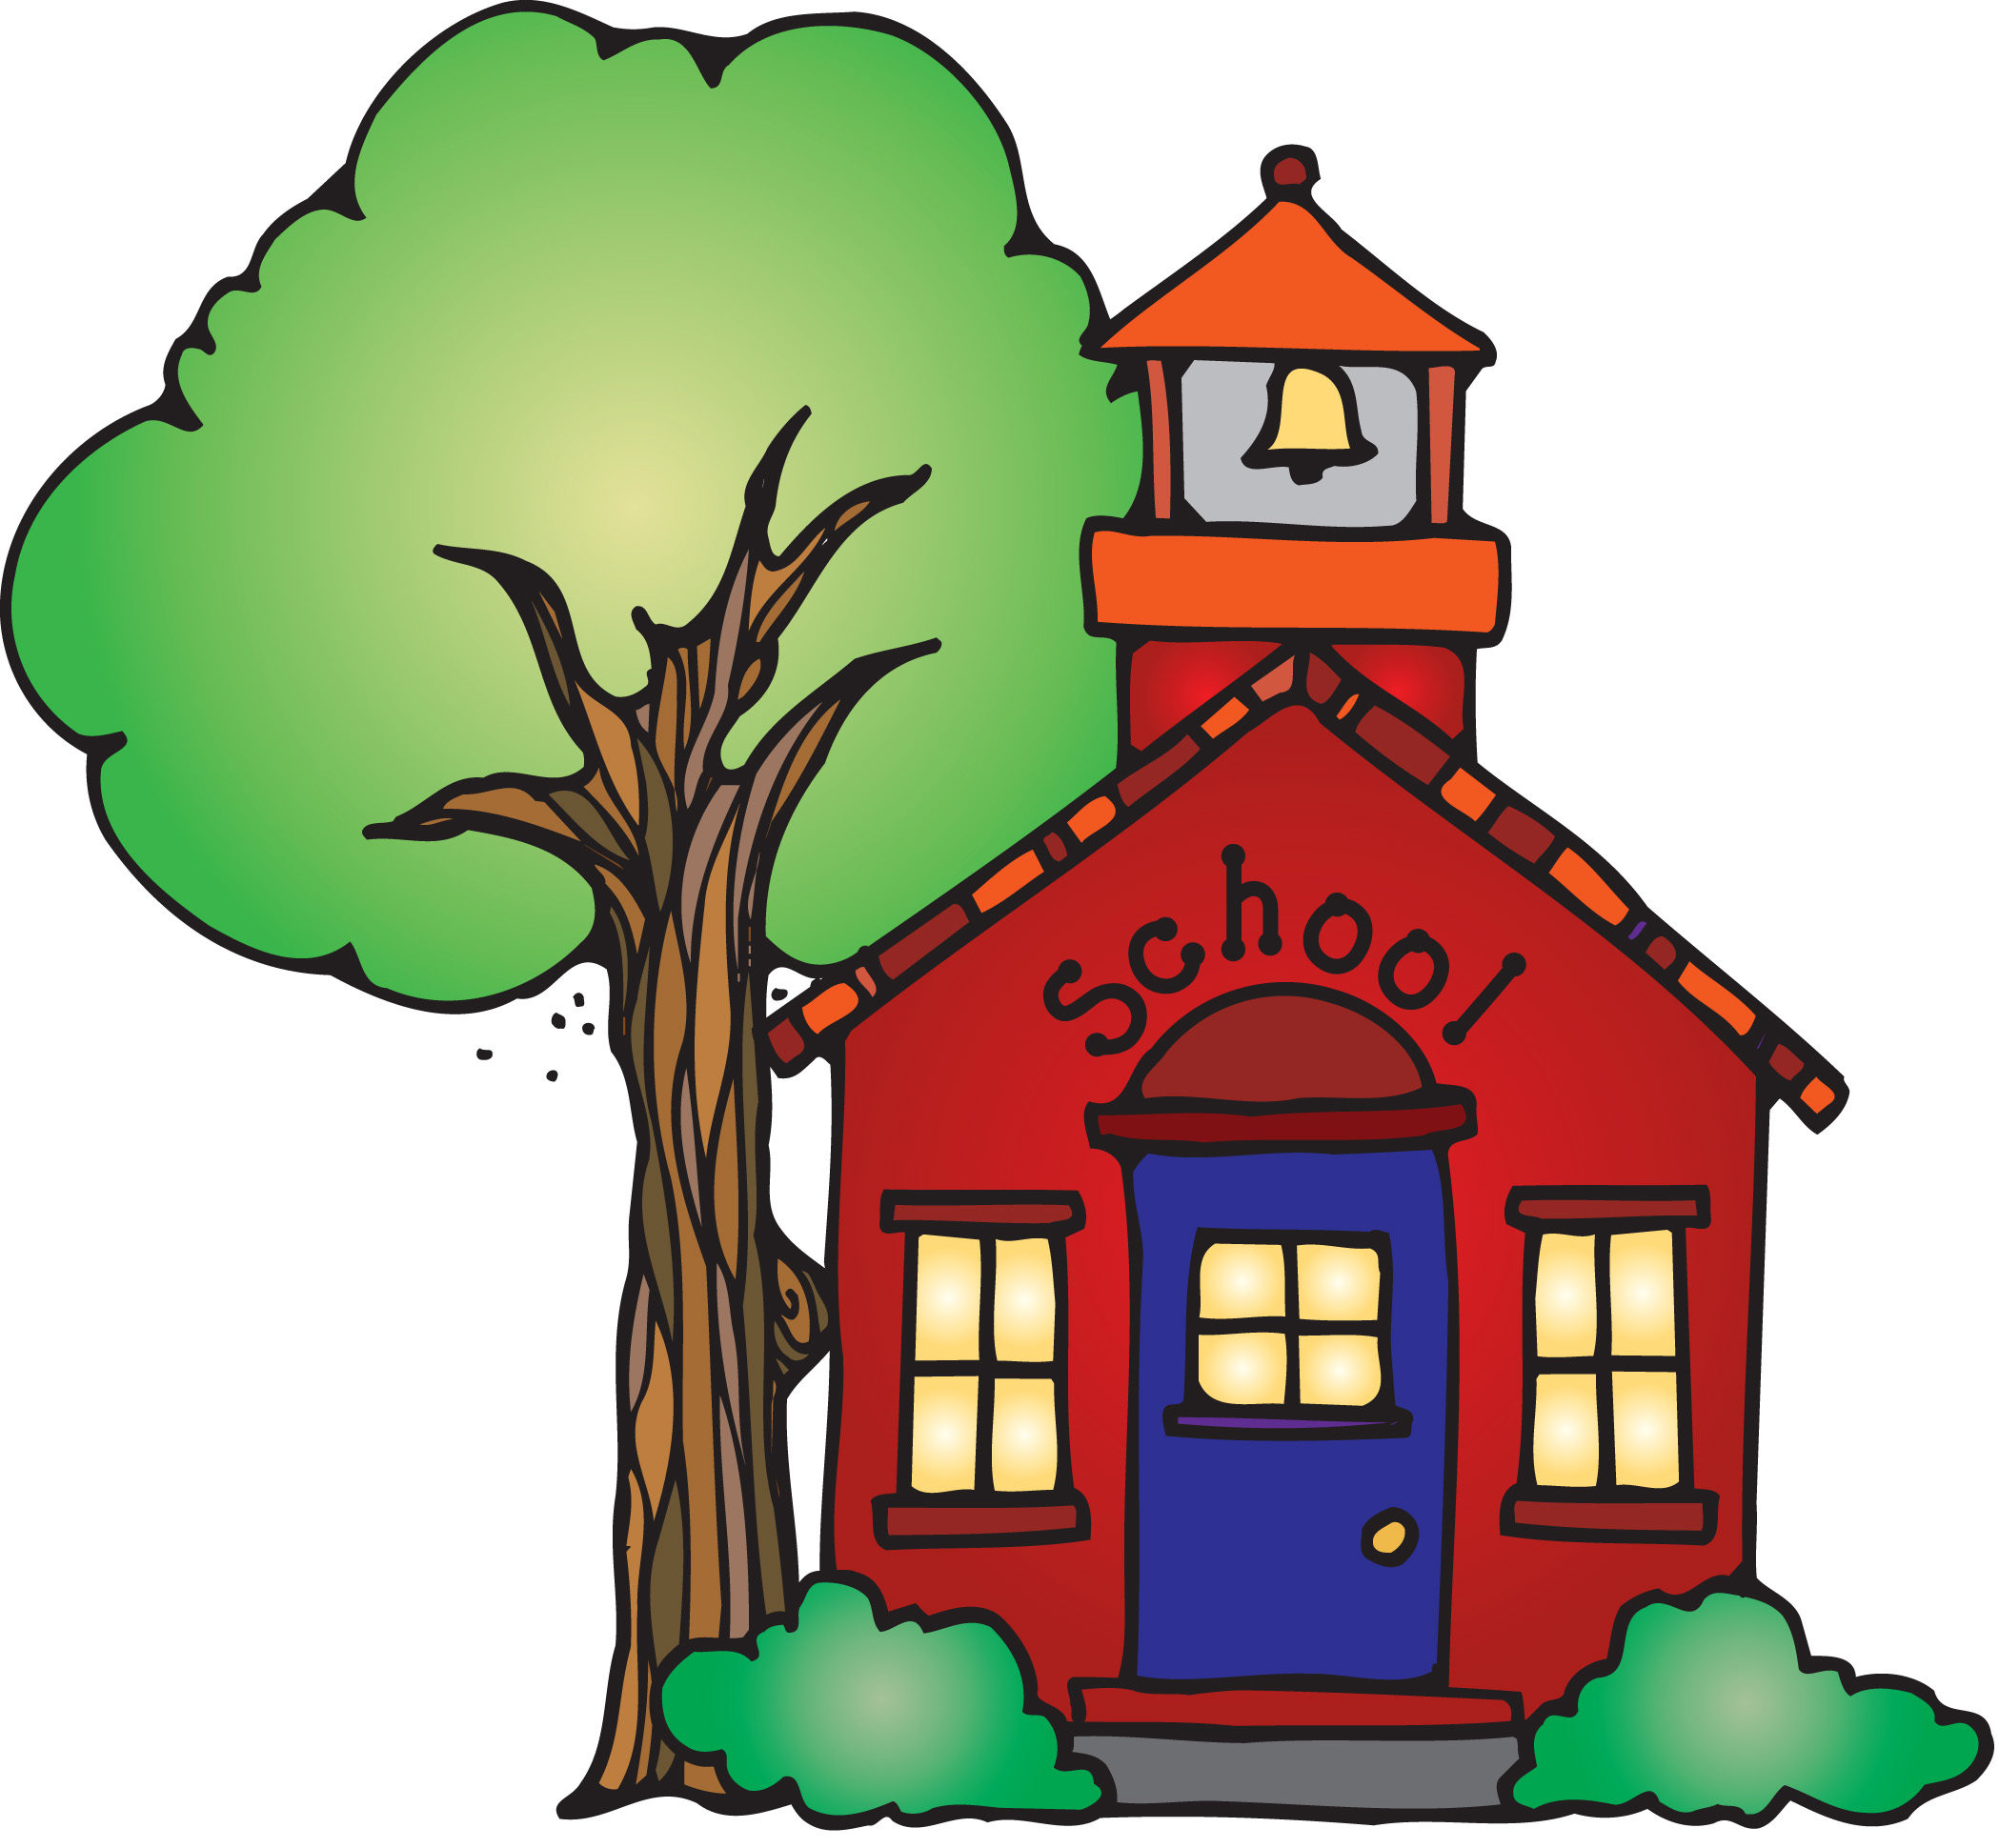 School House Clipart